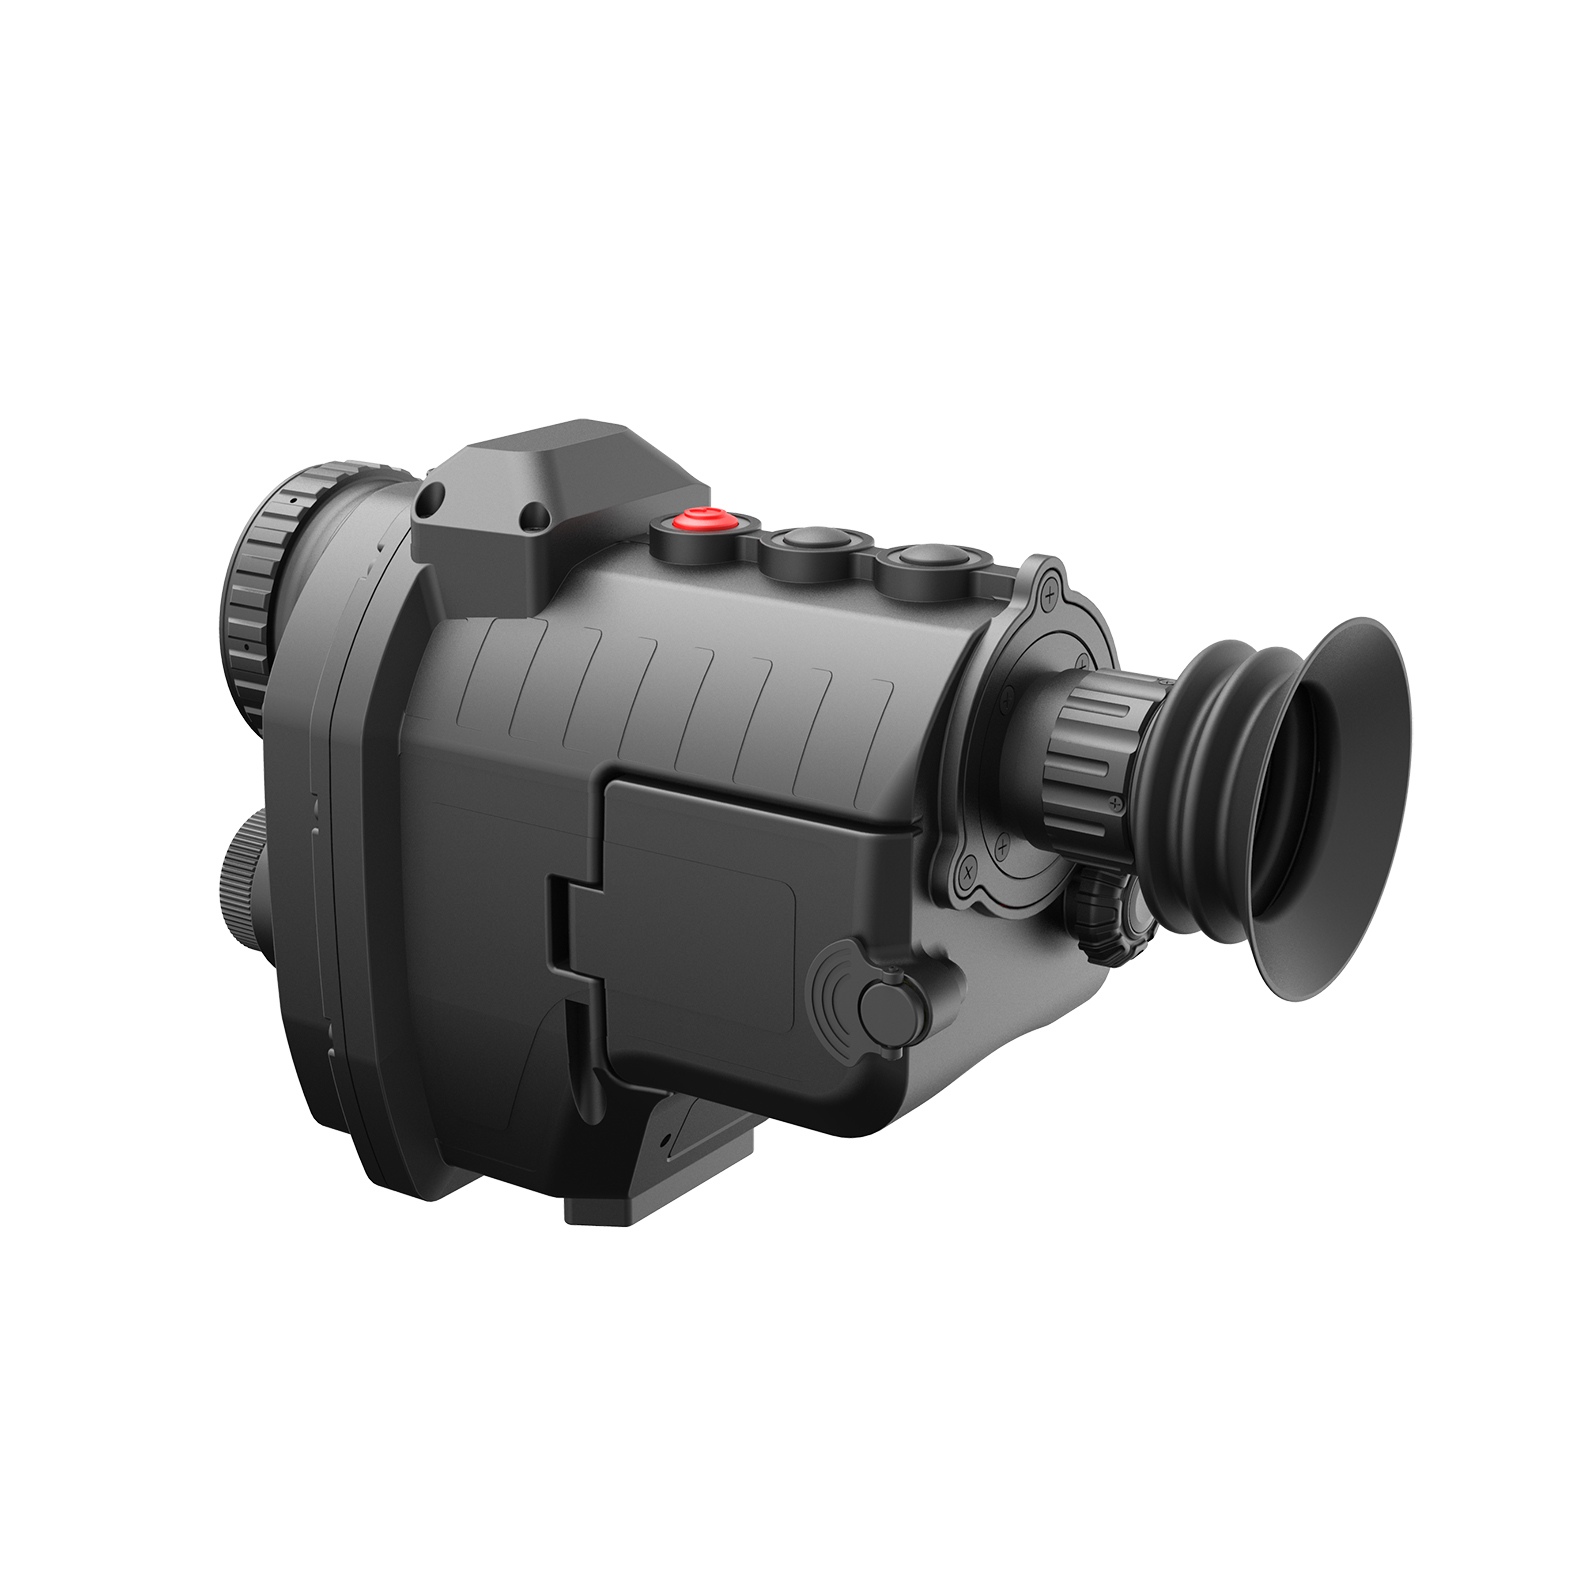 China Suppliers VY Optics Handheld Hunting Laser Distance Meter Rangefinder